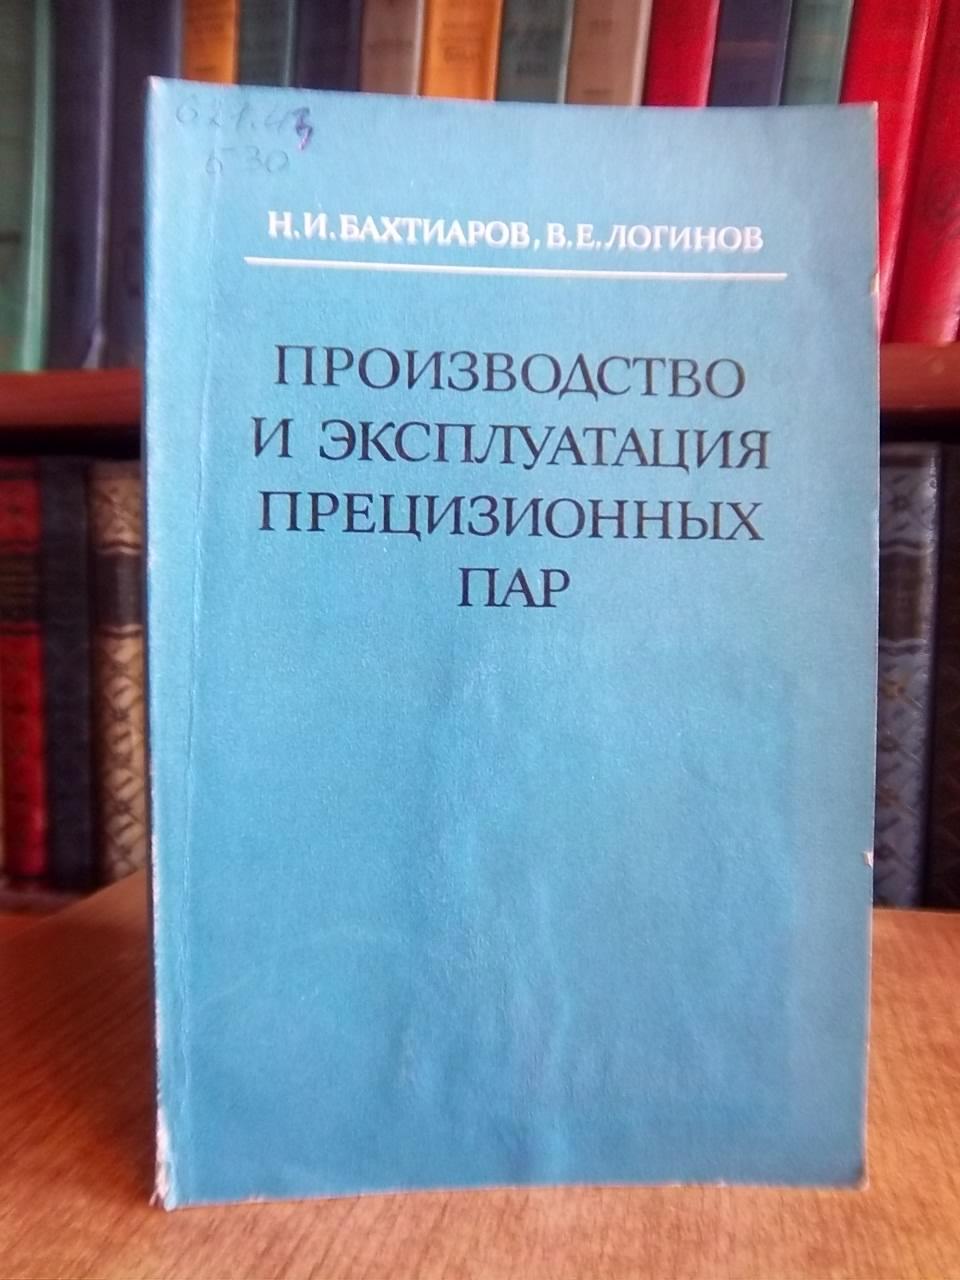 Бахтиаров Н.И. Логинов В.Е.	Производство и эксплуатация прецизионных пар.